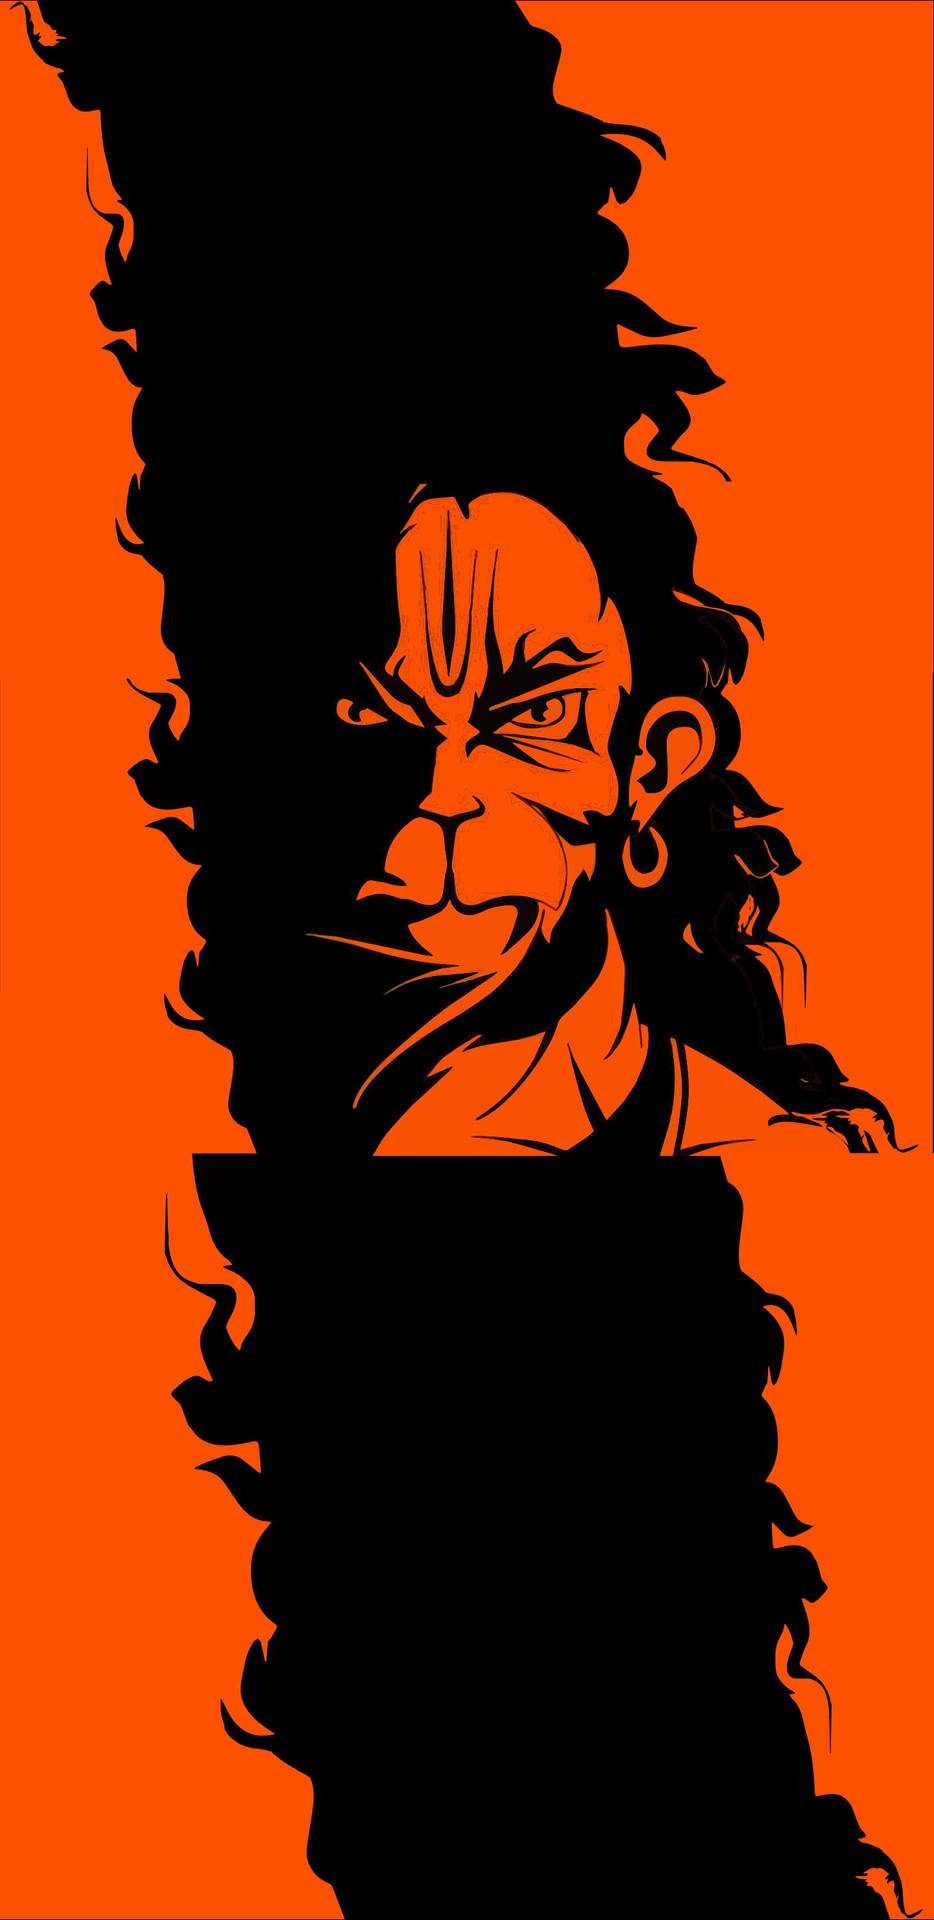 100+] Lord Hanuman Hd Wallpapers | Wallpapers.com